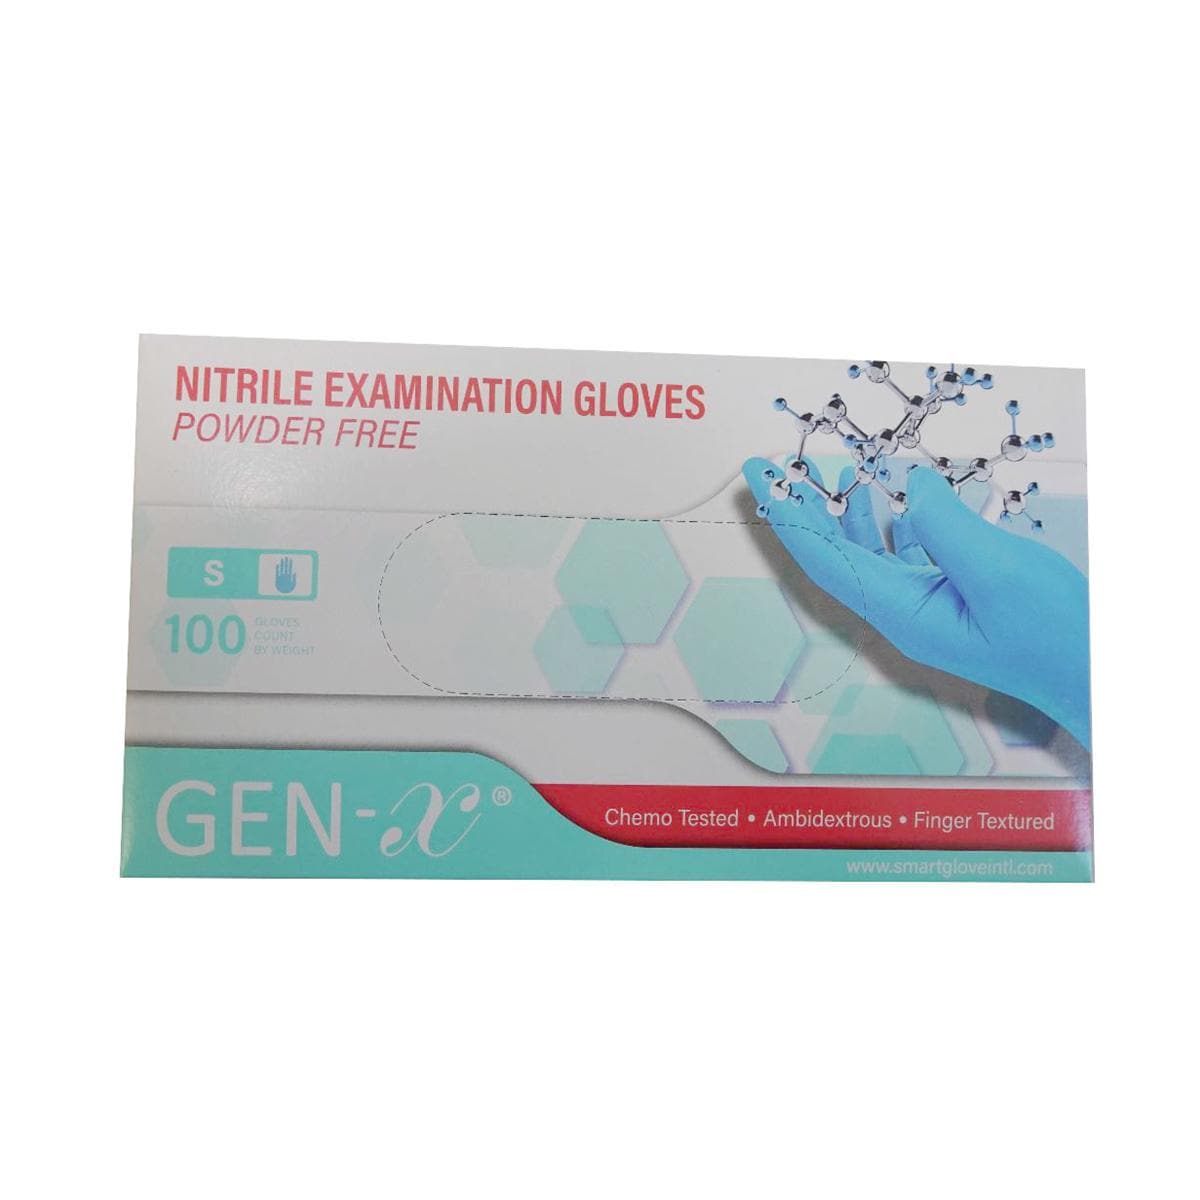 Gen-X Nitrile Examination Glove PowderFree - X-Large, 100 stuks